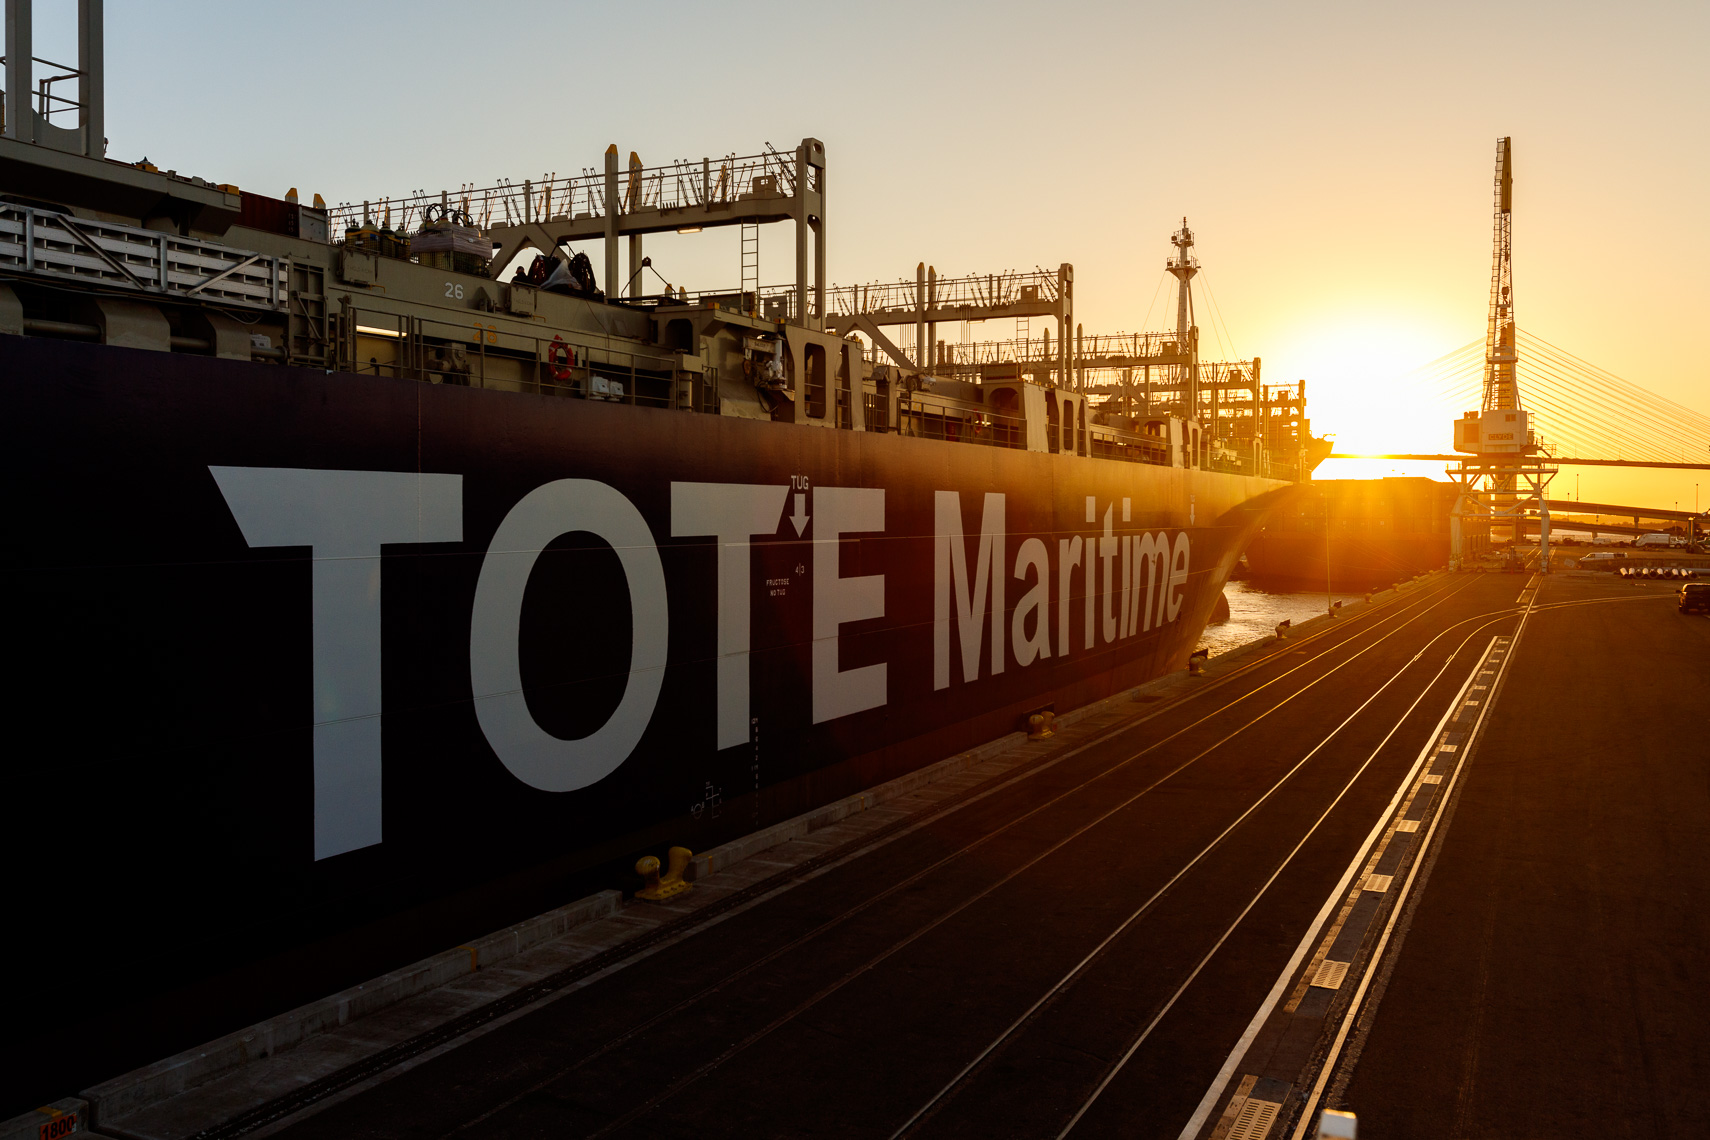 Tote Maritime